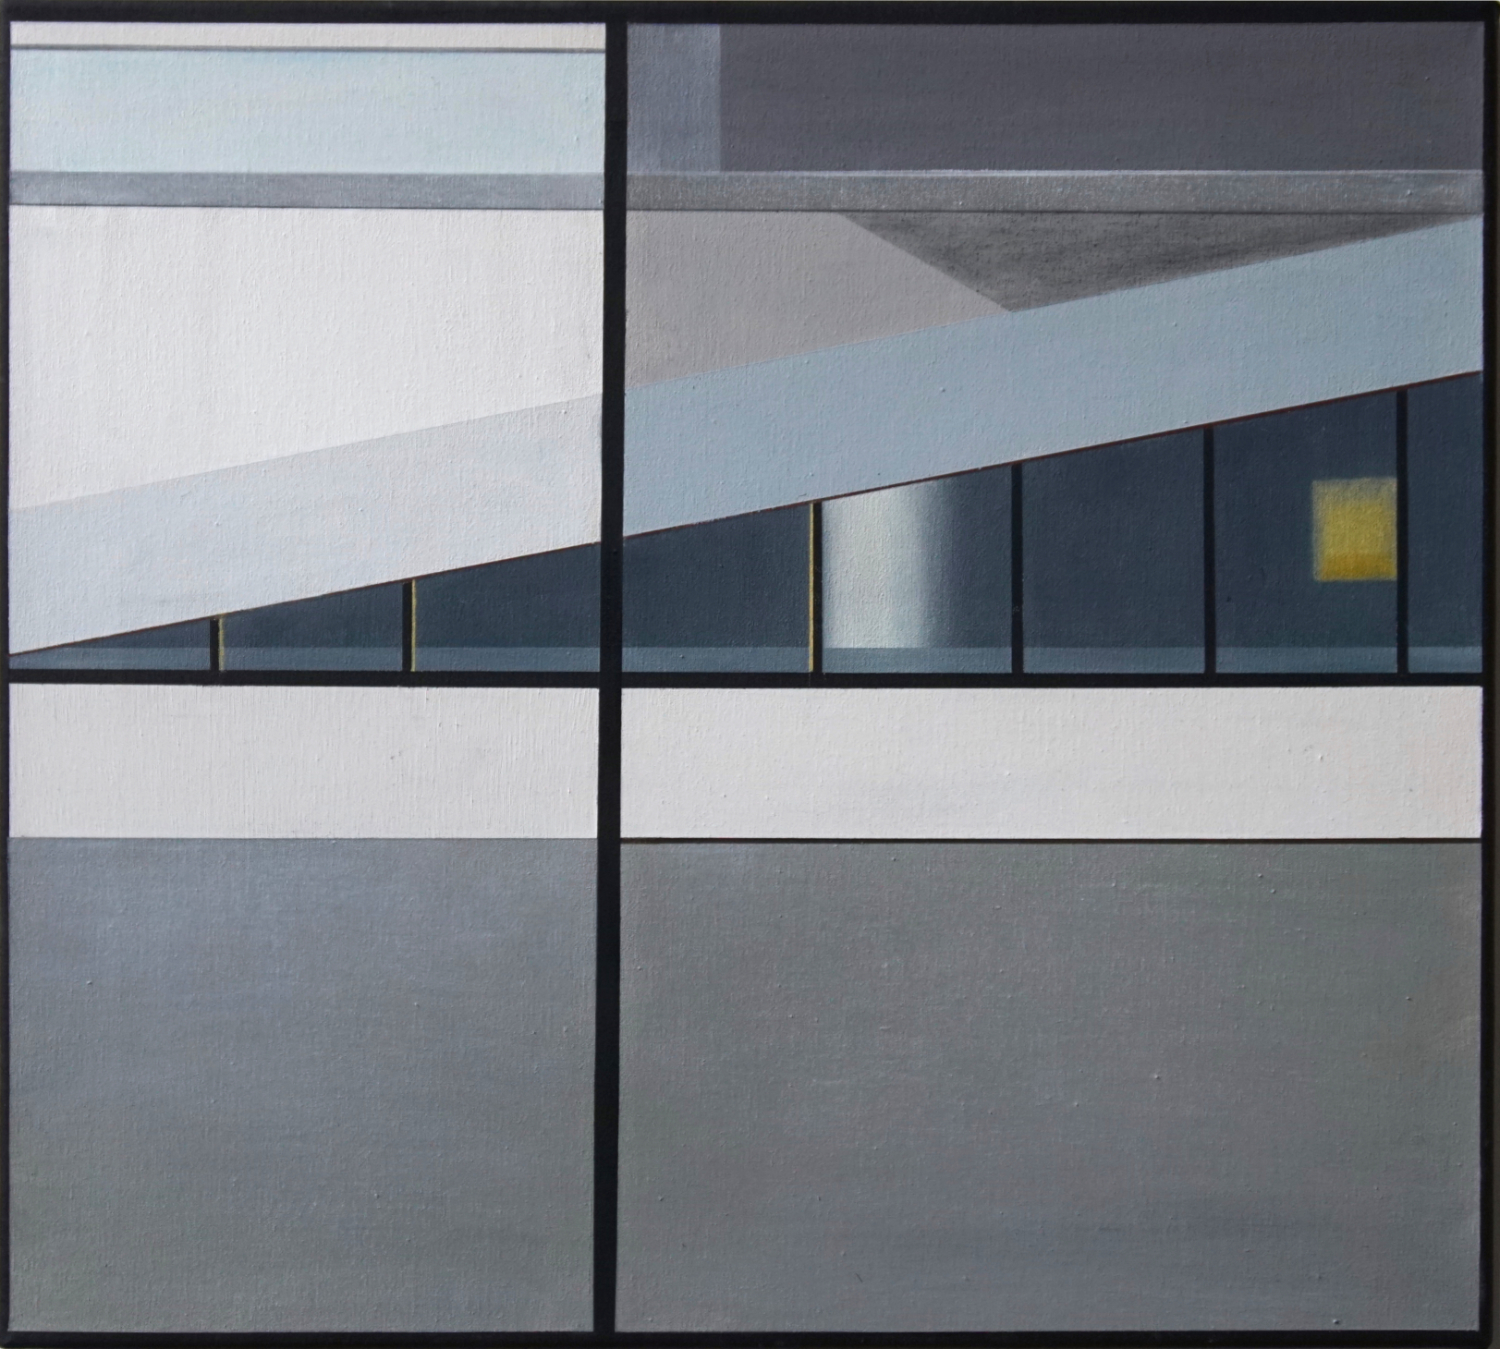 Berlin-Kantgaragen I, 2022, 45 x 50 cm, Öl/Lw, Oil on canvas